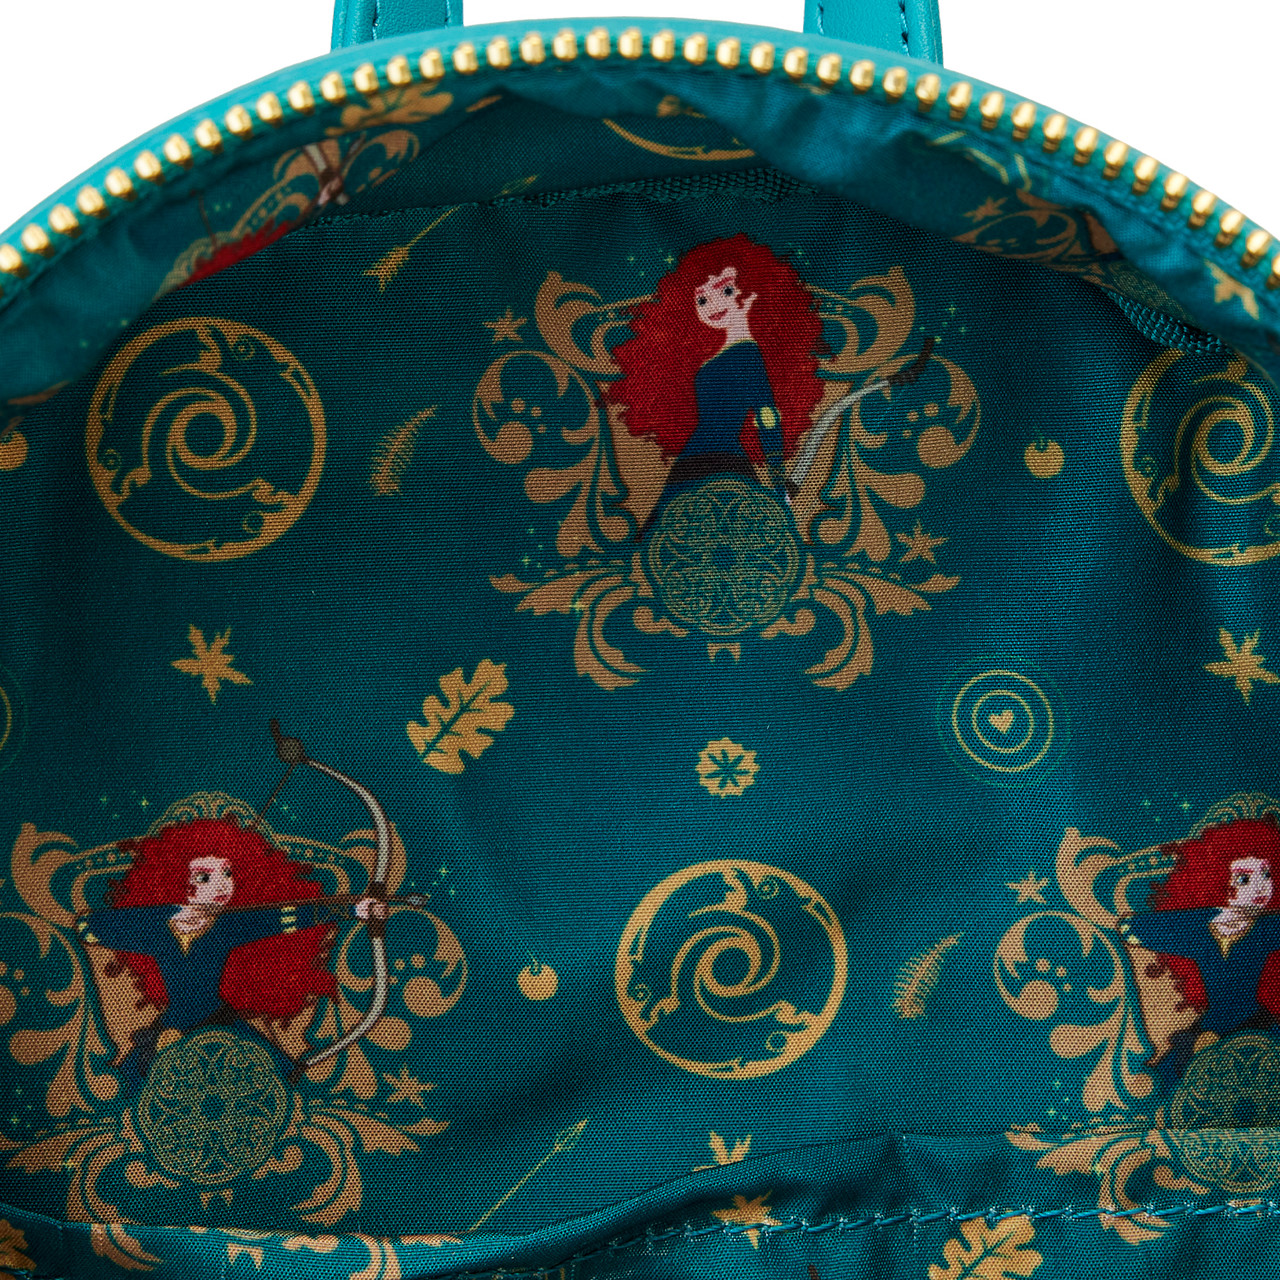 Loungefly X Disney Pixar Brave Merida Princess Scene Mini Backpack